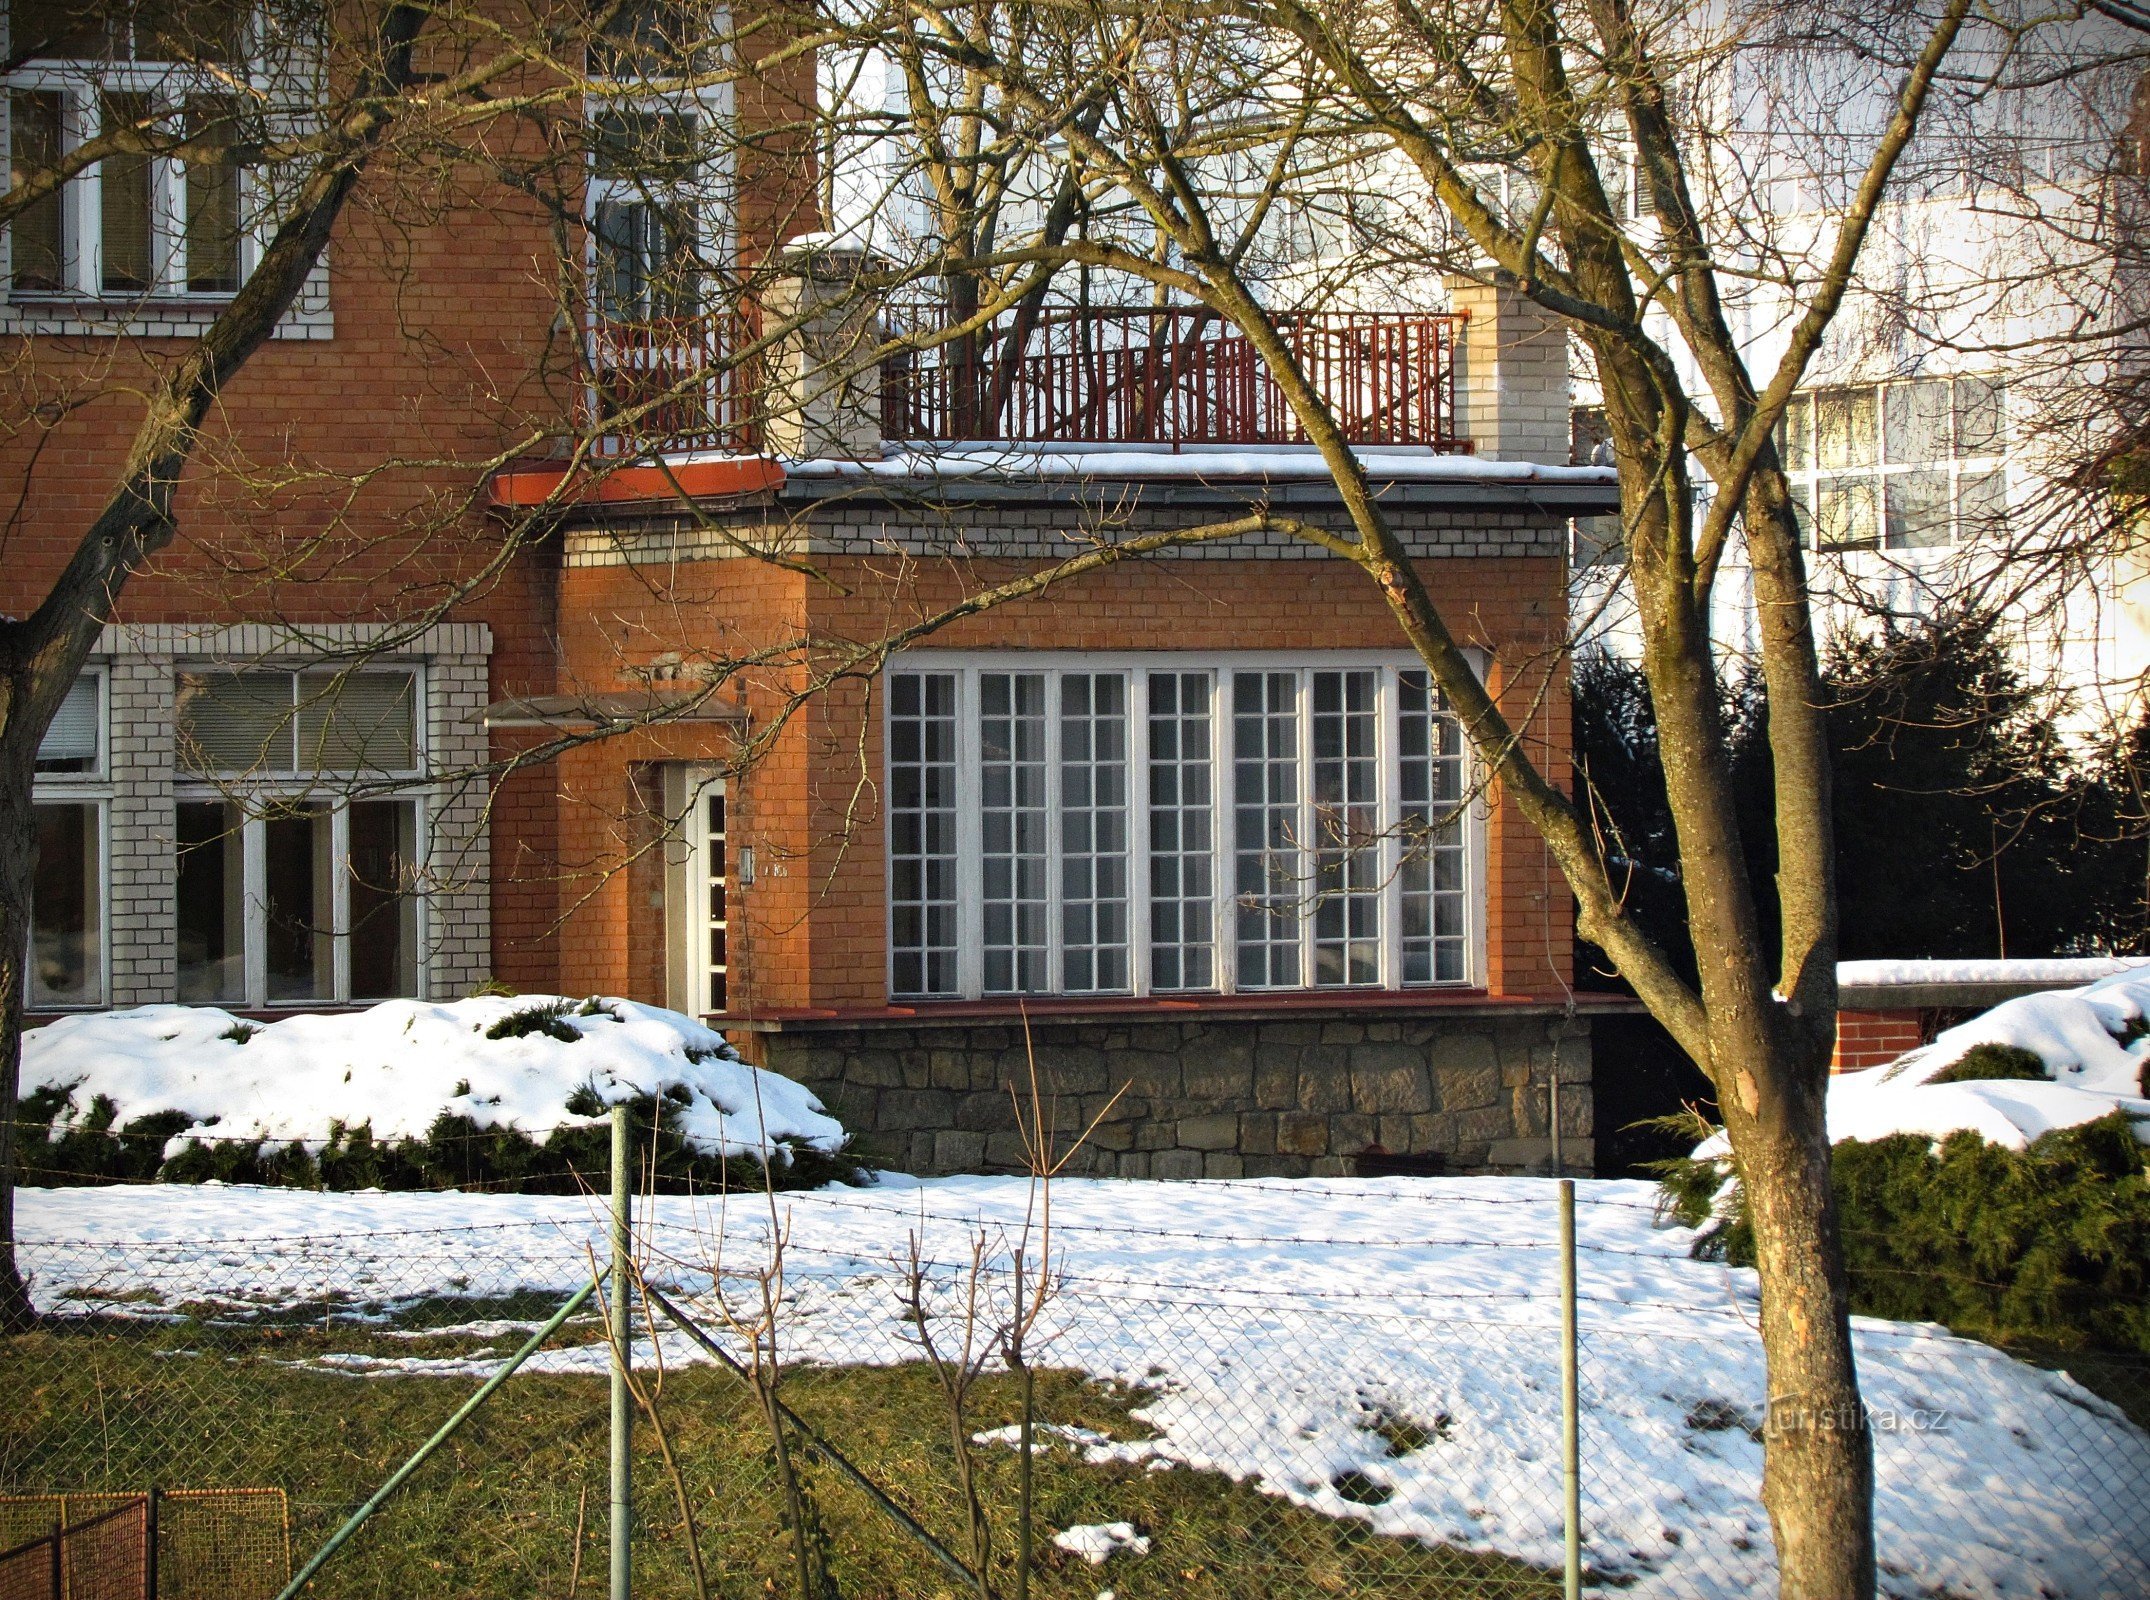 Zlín - Jan Antonín Bata's villa